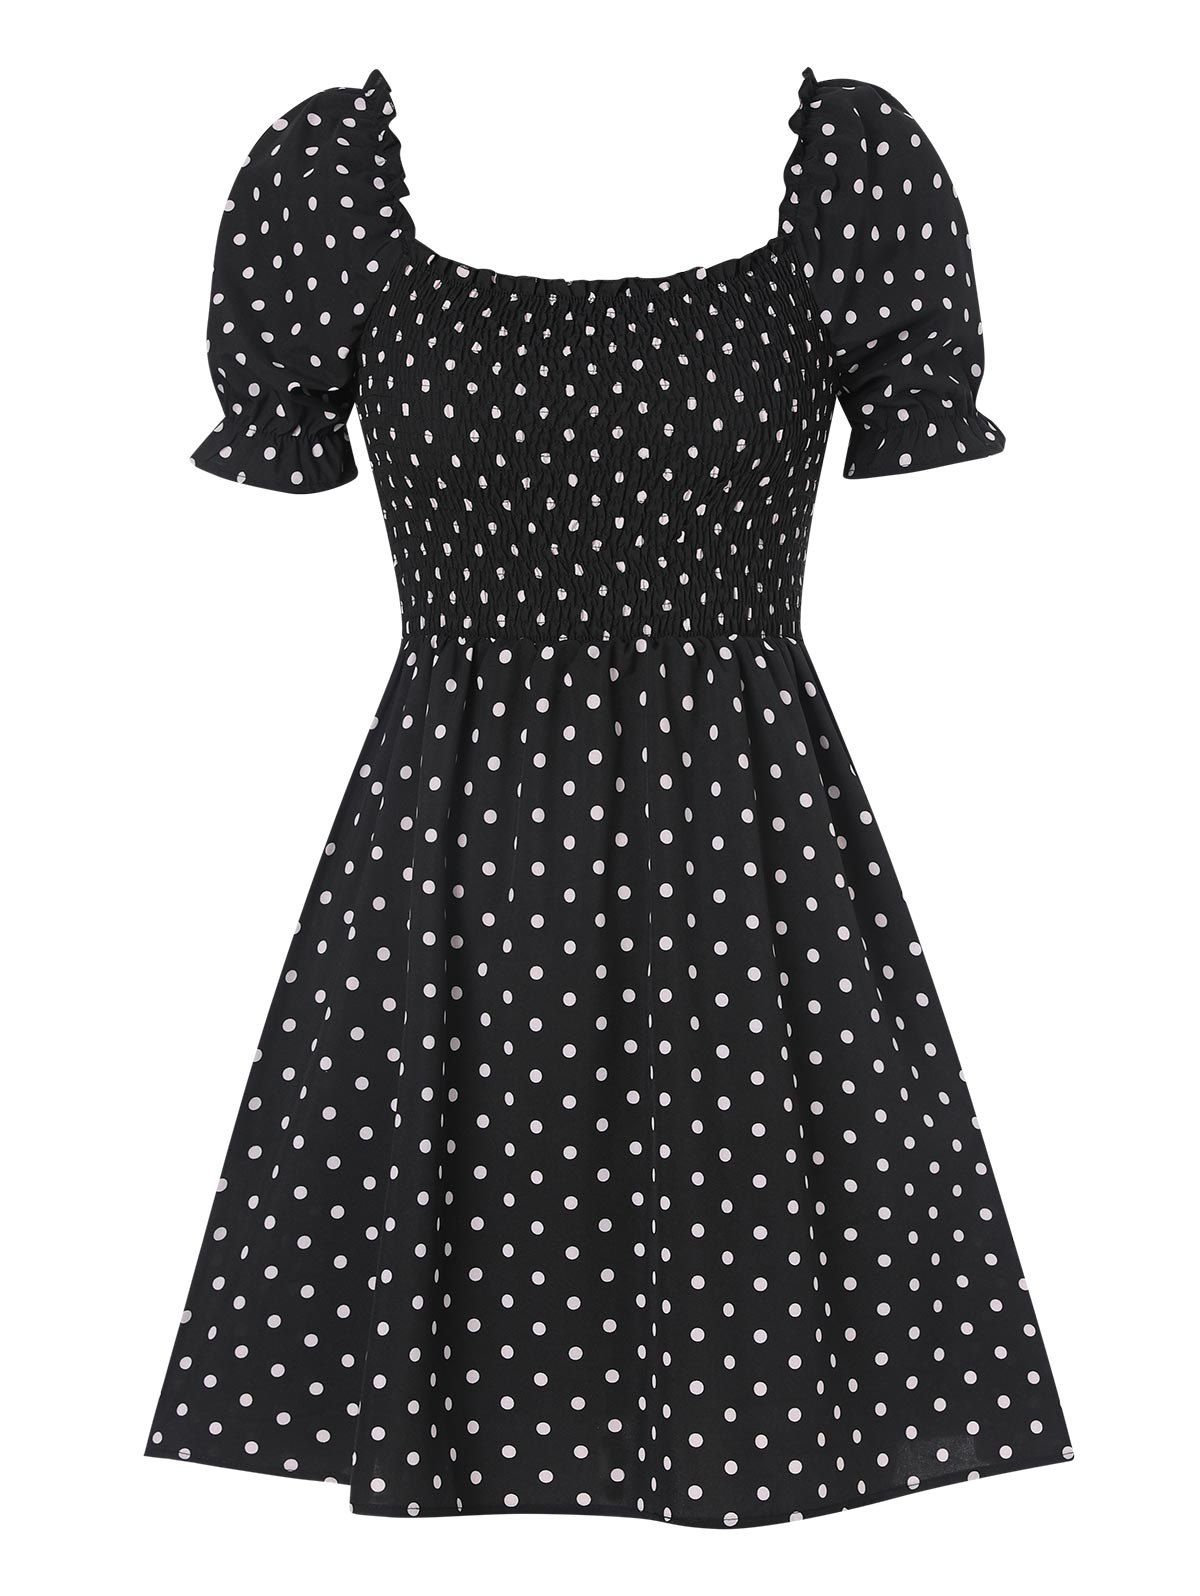 Vintage Dress Polka Dots Print Mini Dress Ruffled Puff Sleeve Square Neck Dress - BLACK M